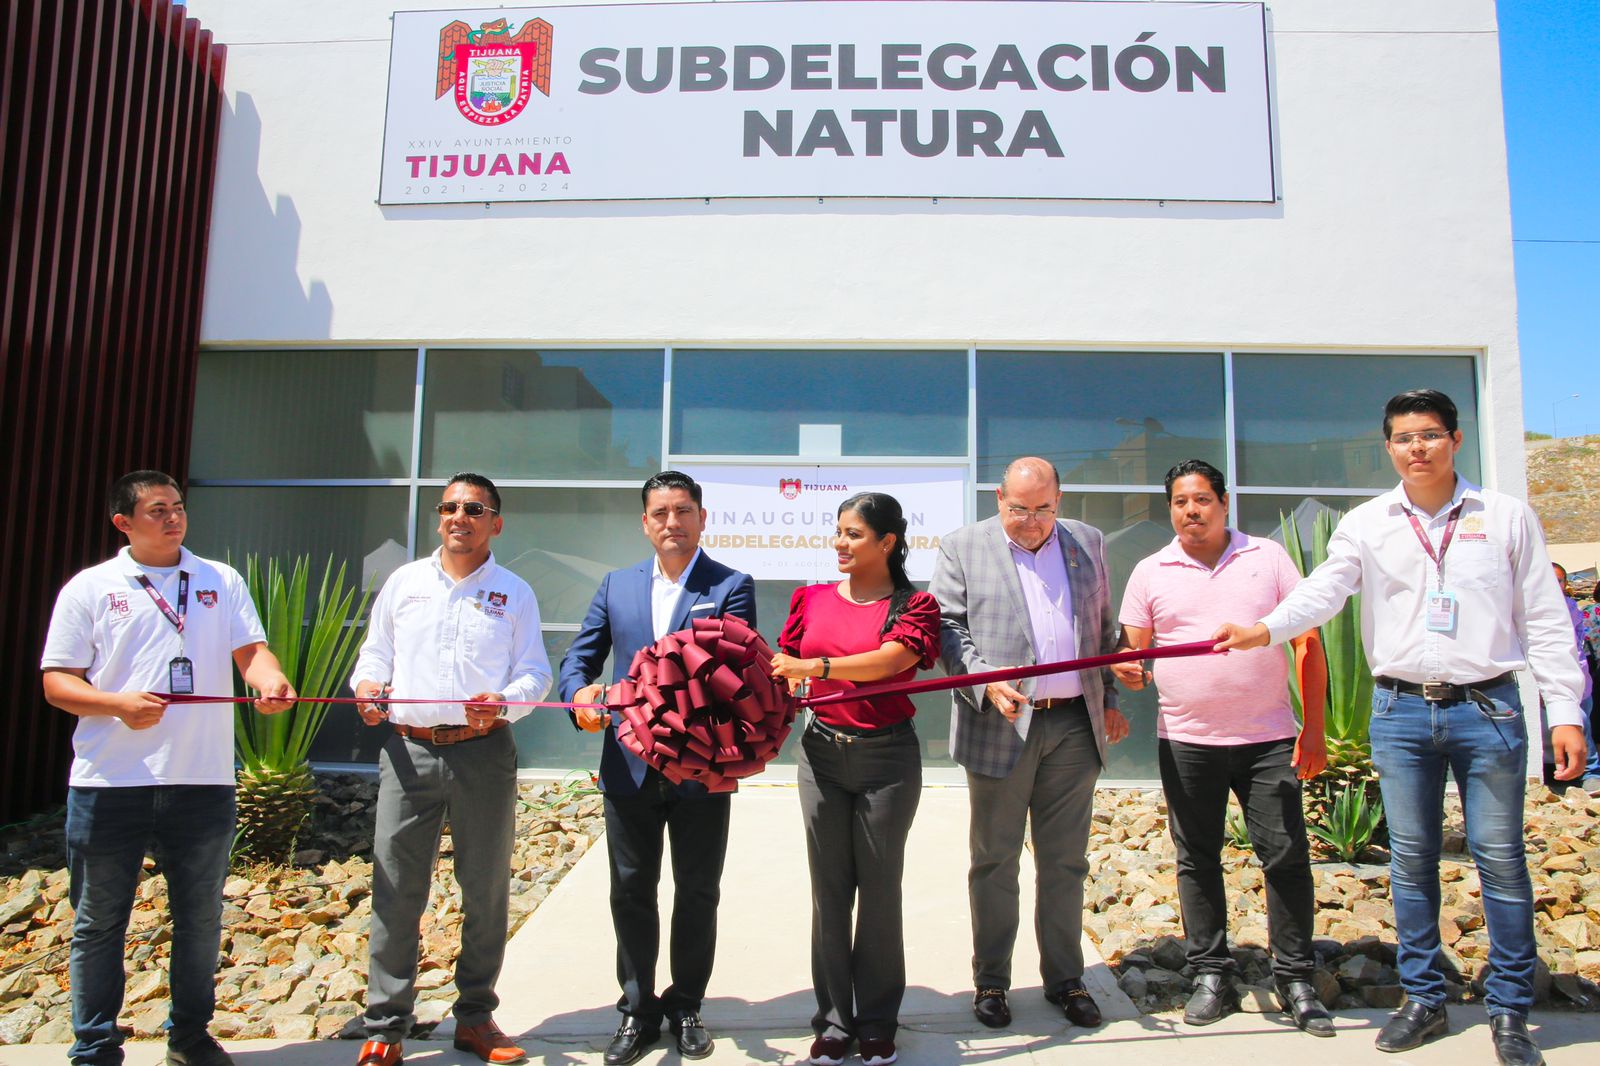 Alcaldesa de Tijuana inaugura subdelegación Natura | Tijuana